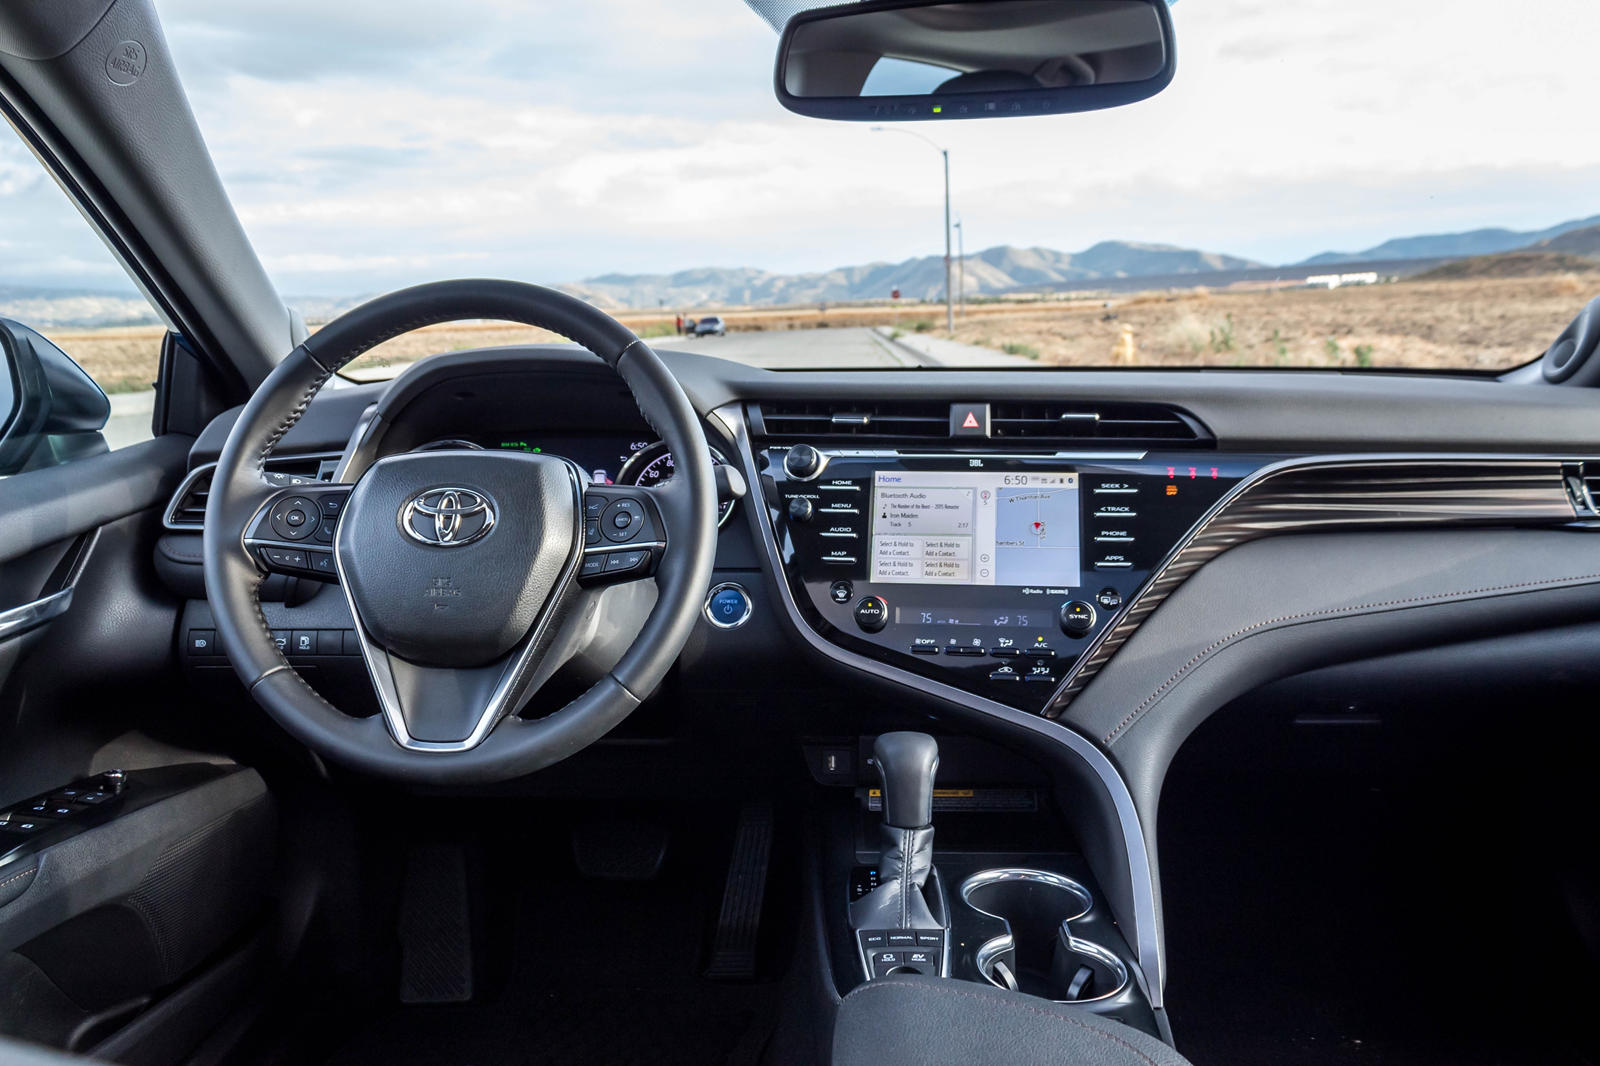 Toyota Camry hybrid steering wheel making groan noise?